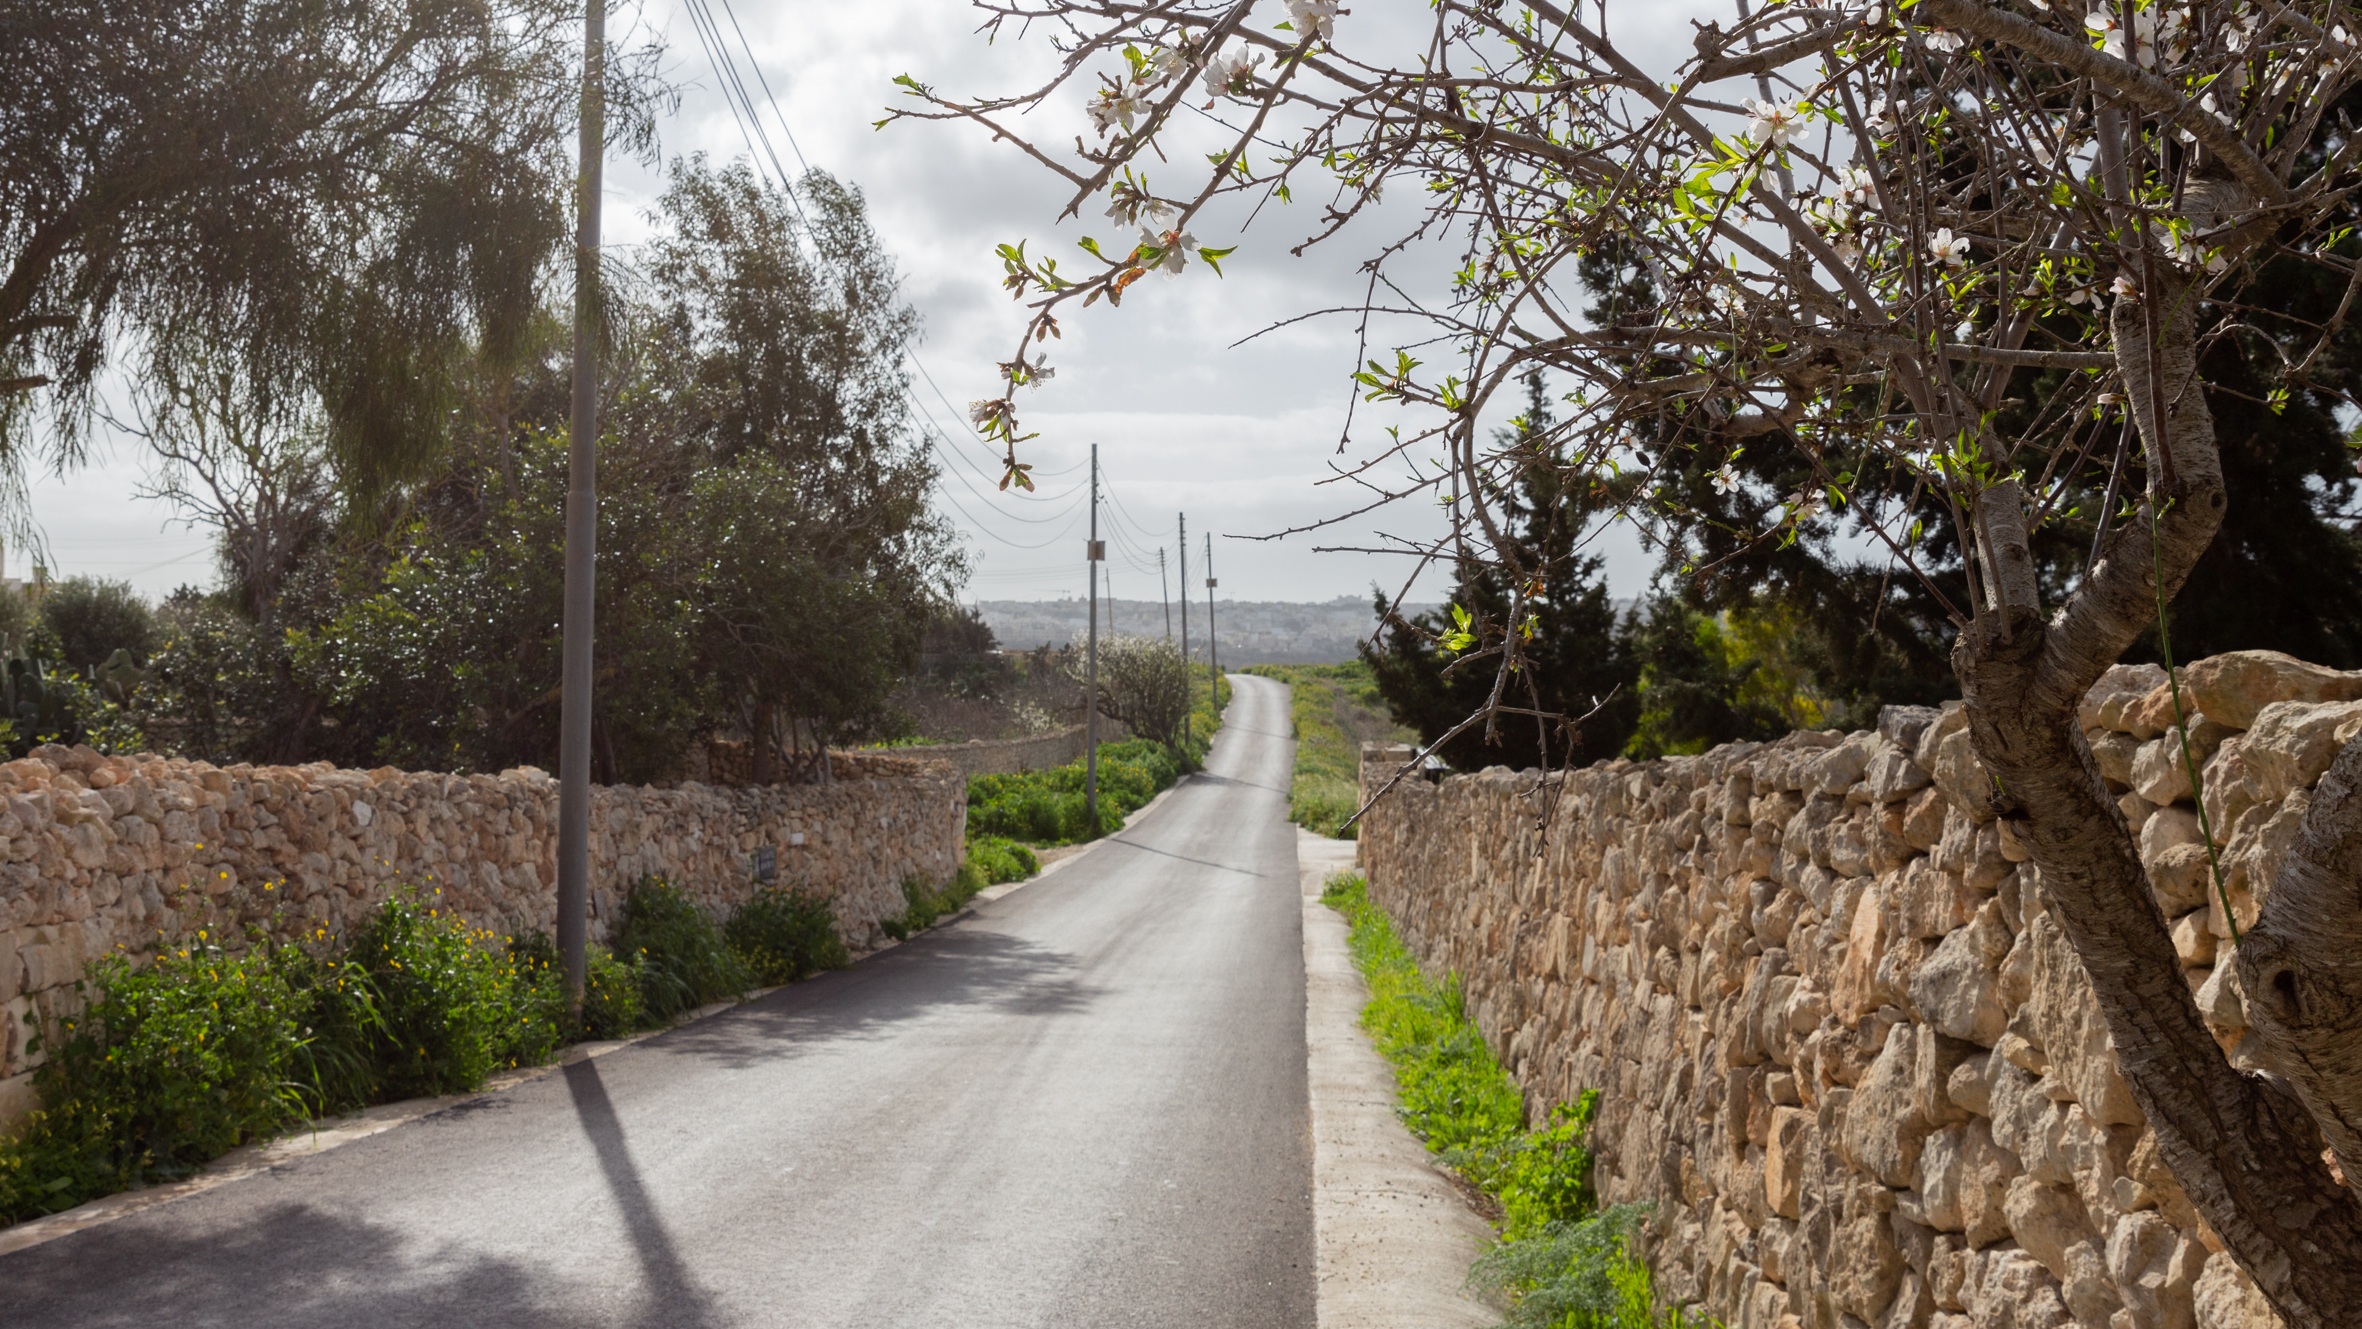 Infrastructure Malta upgrades 100 rural roads in 2021